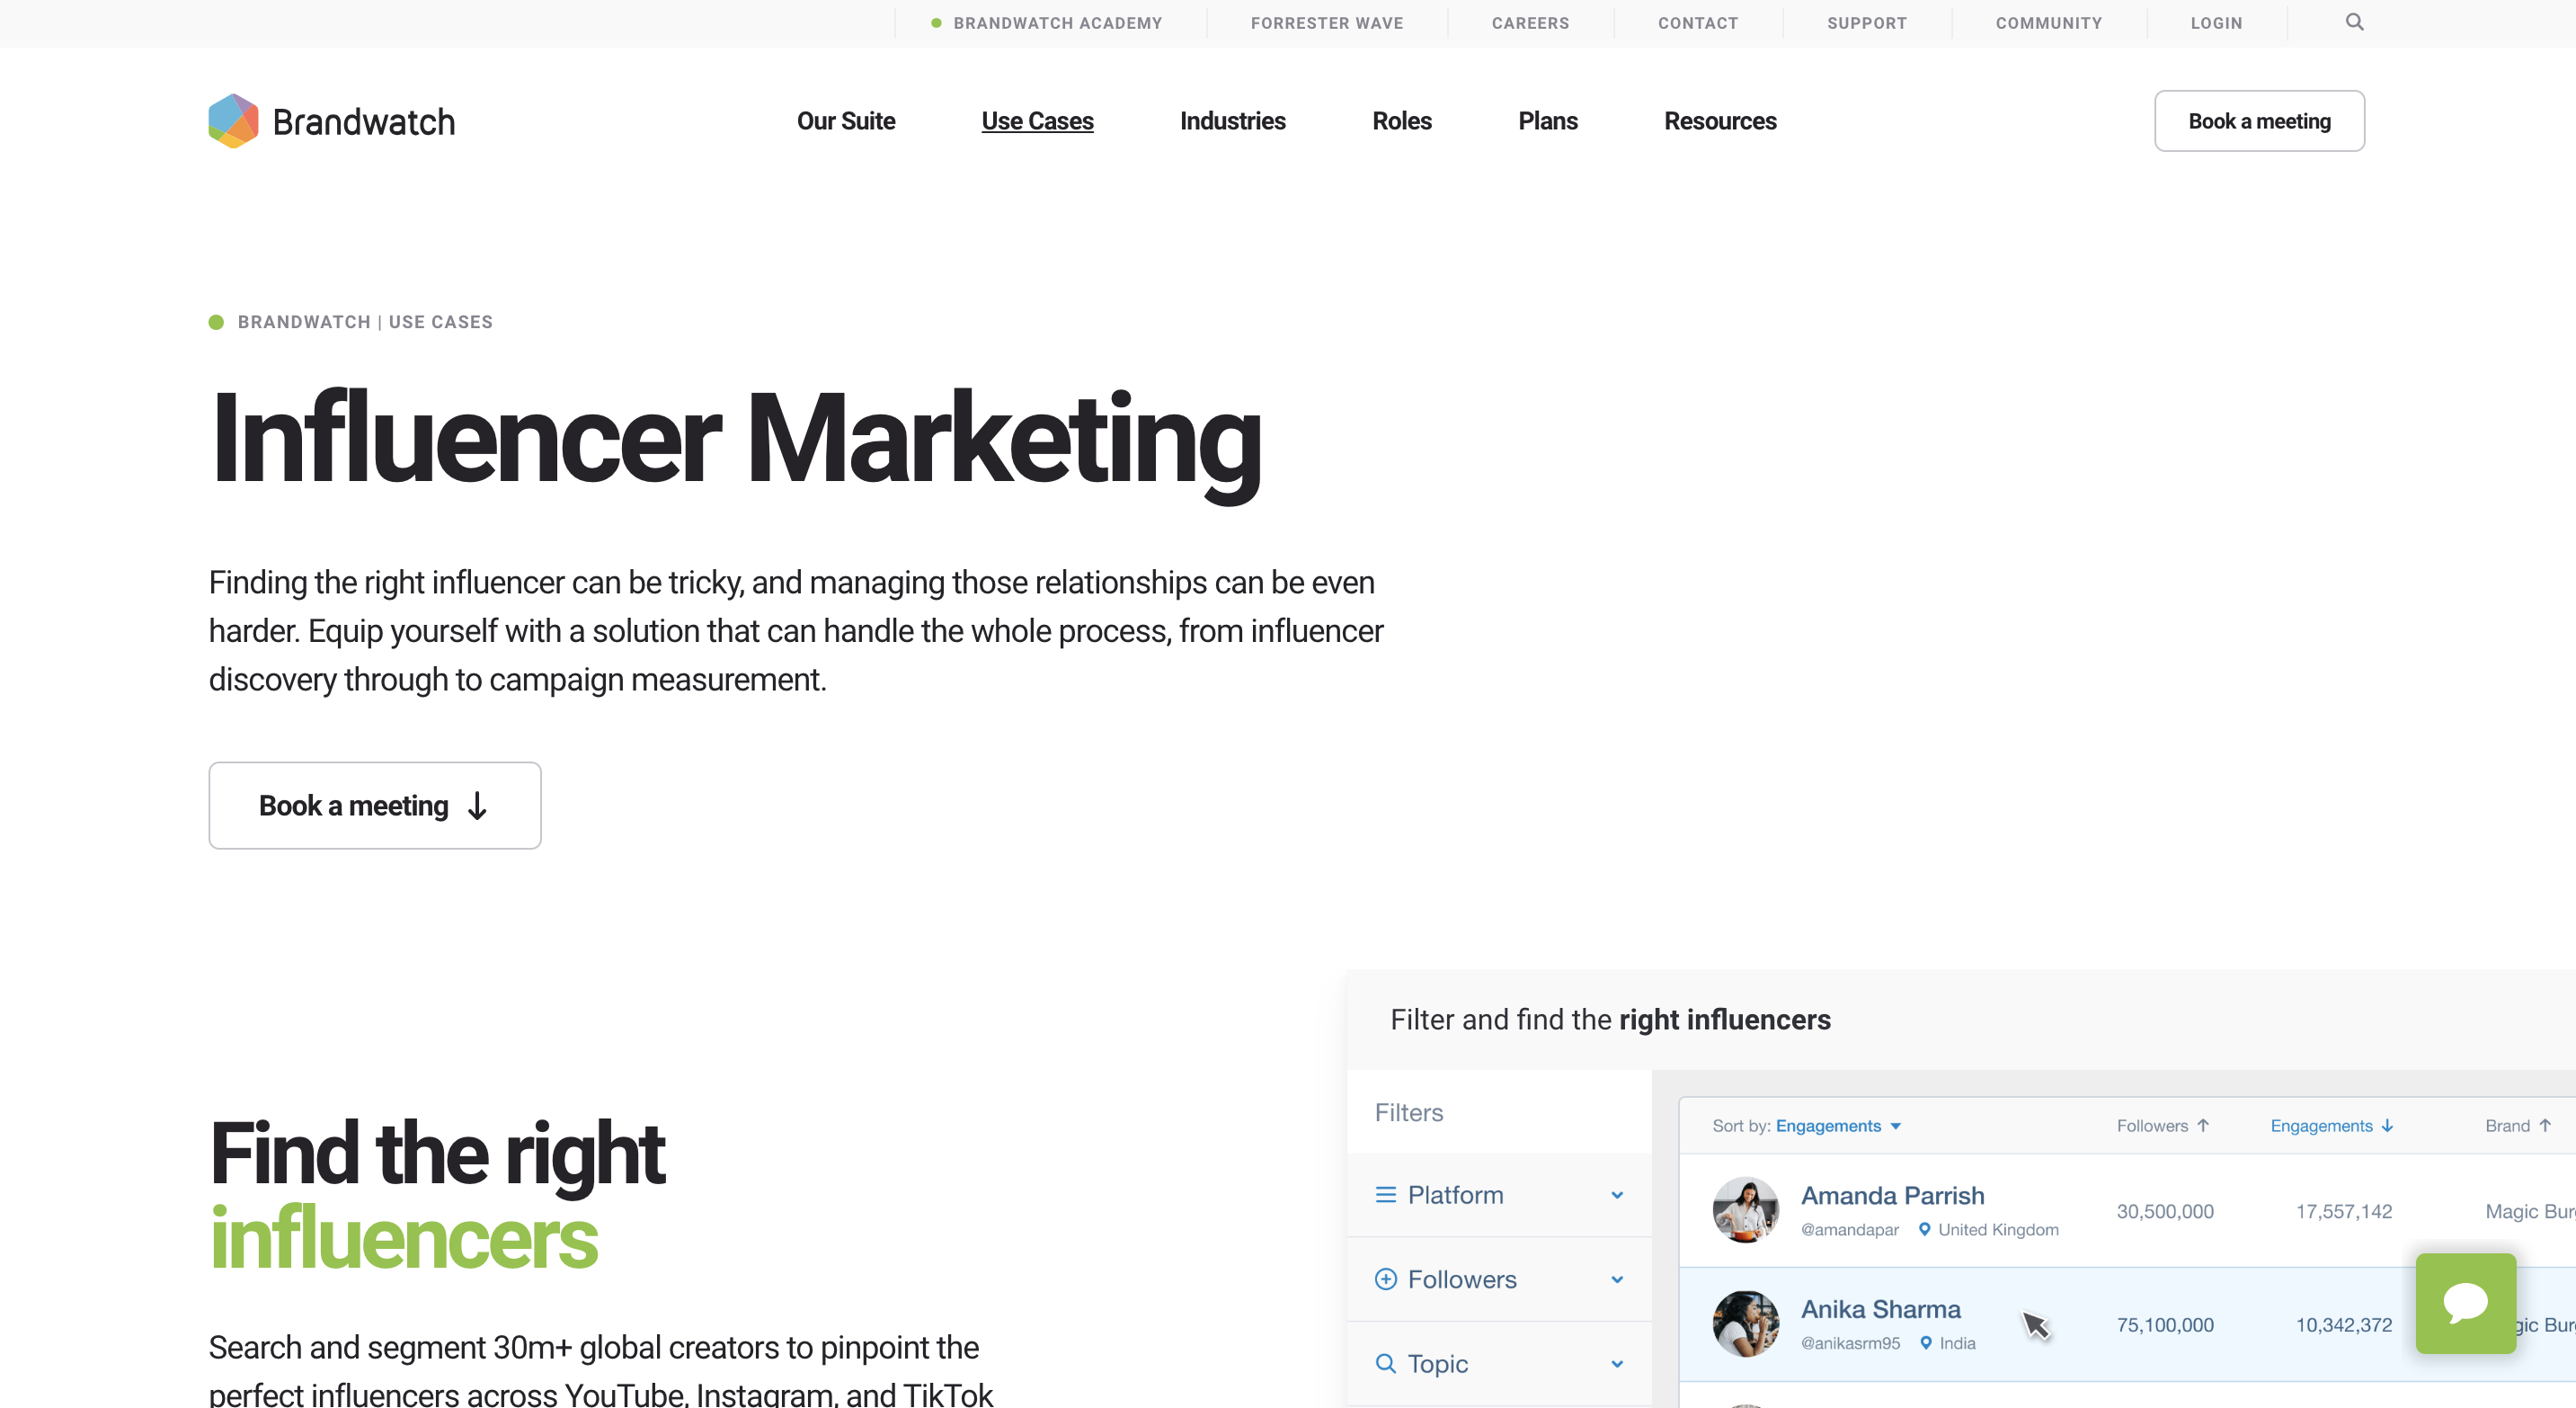 A screenshot of Brandwatch's influencer marketing page